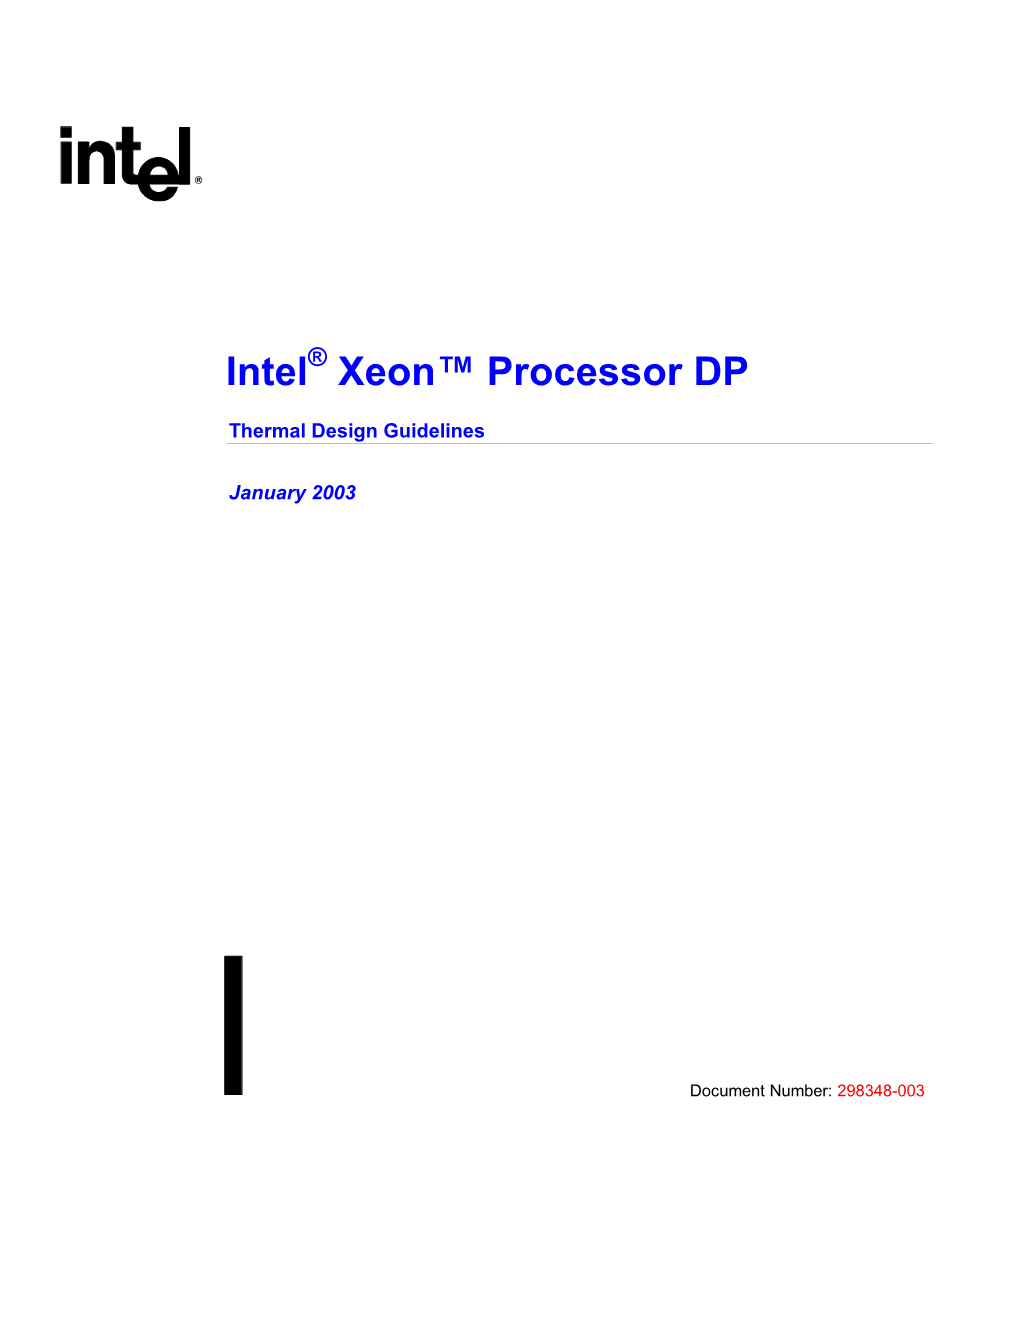 Intel Xeon™ Processor DP